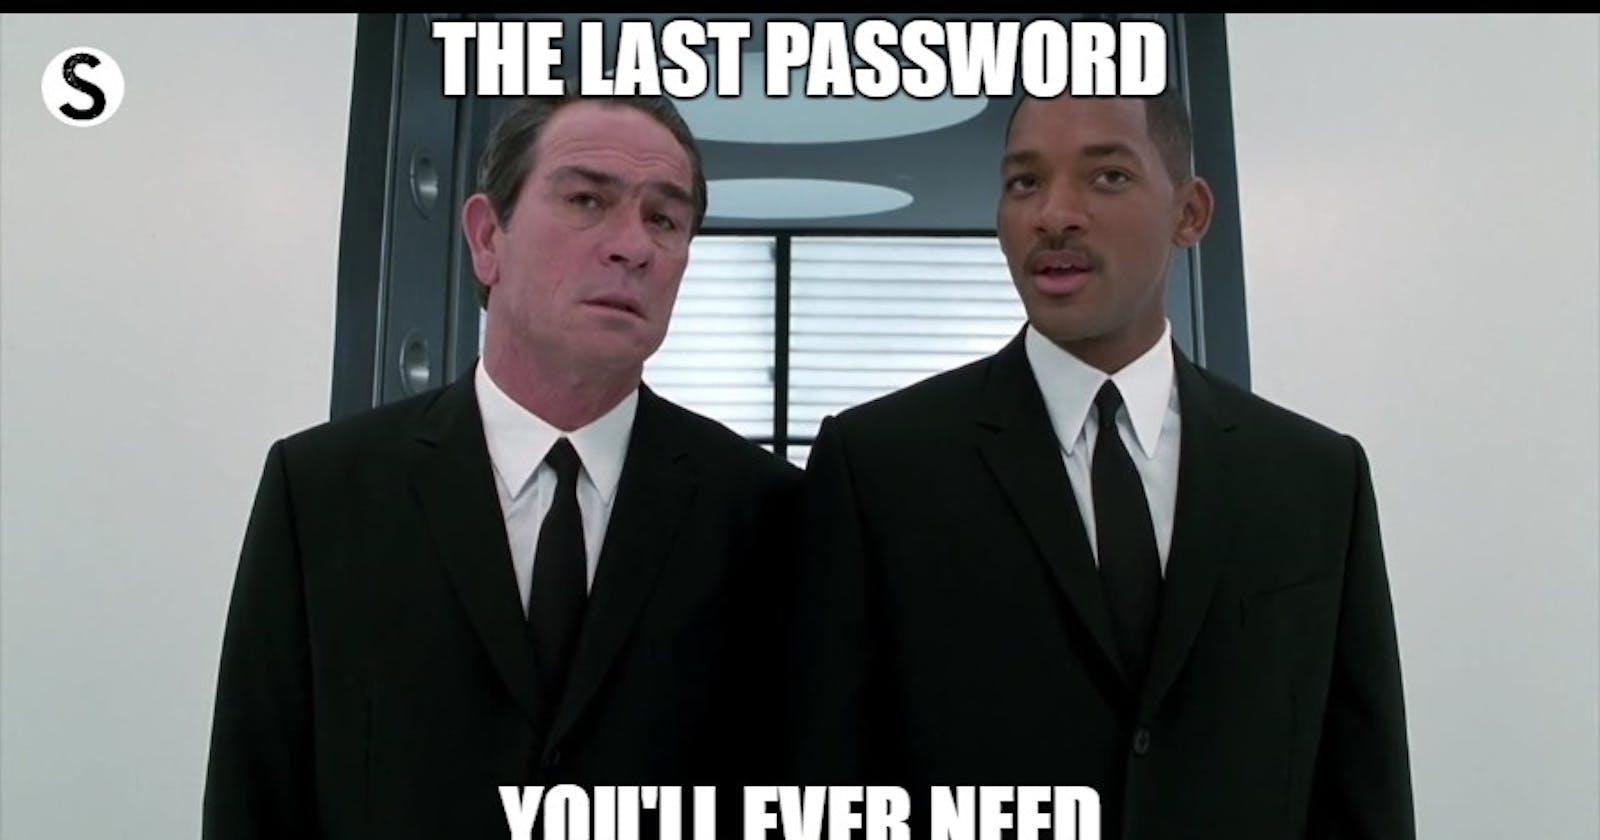 Main password manager benefit